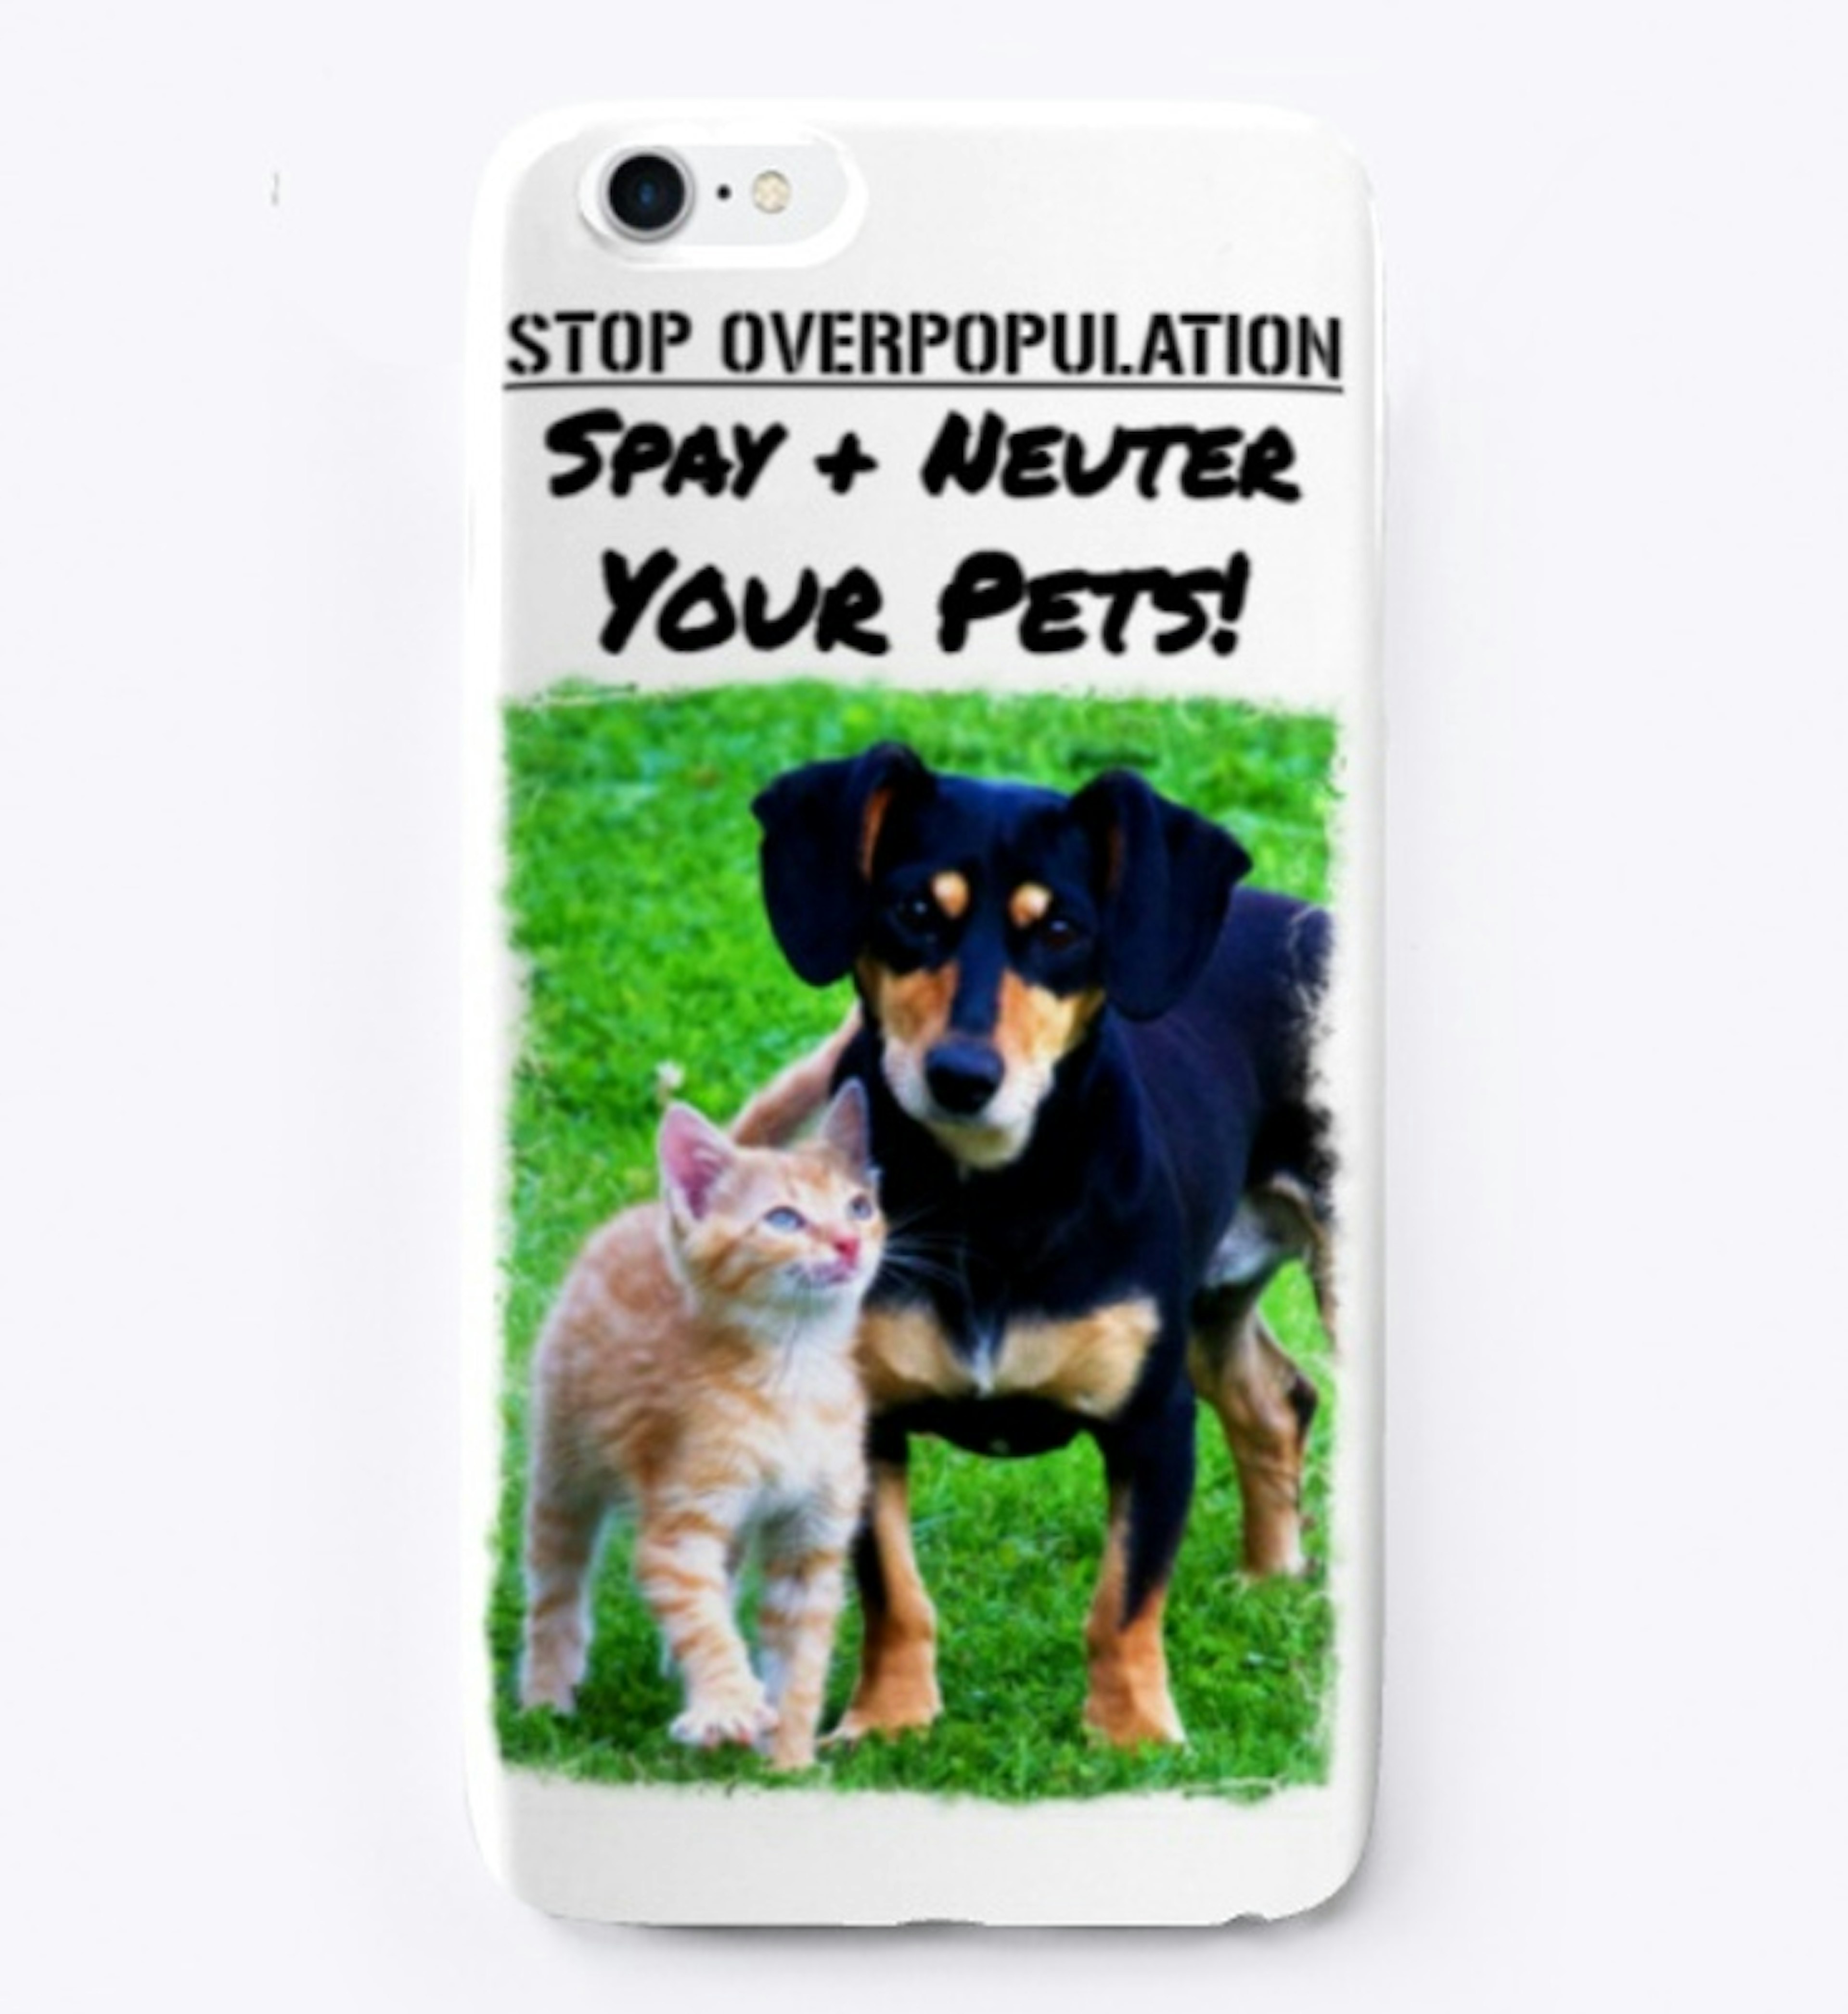 Stop Overpopulation - Spay + Neuter Pets